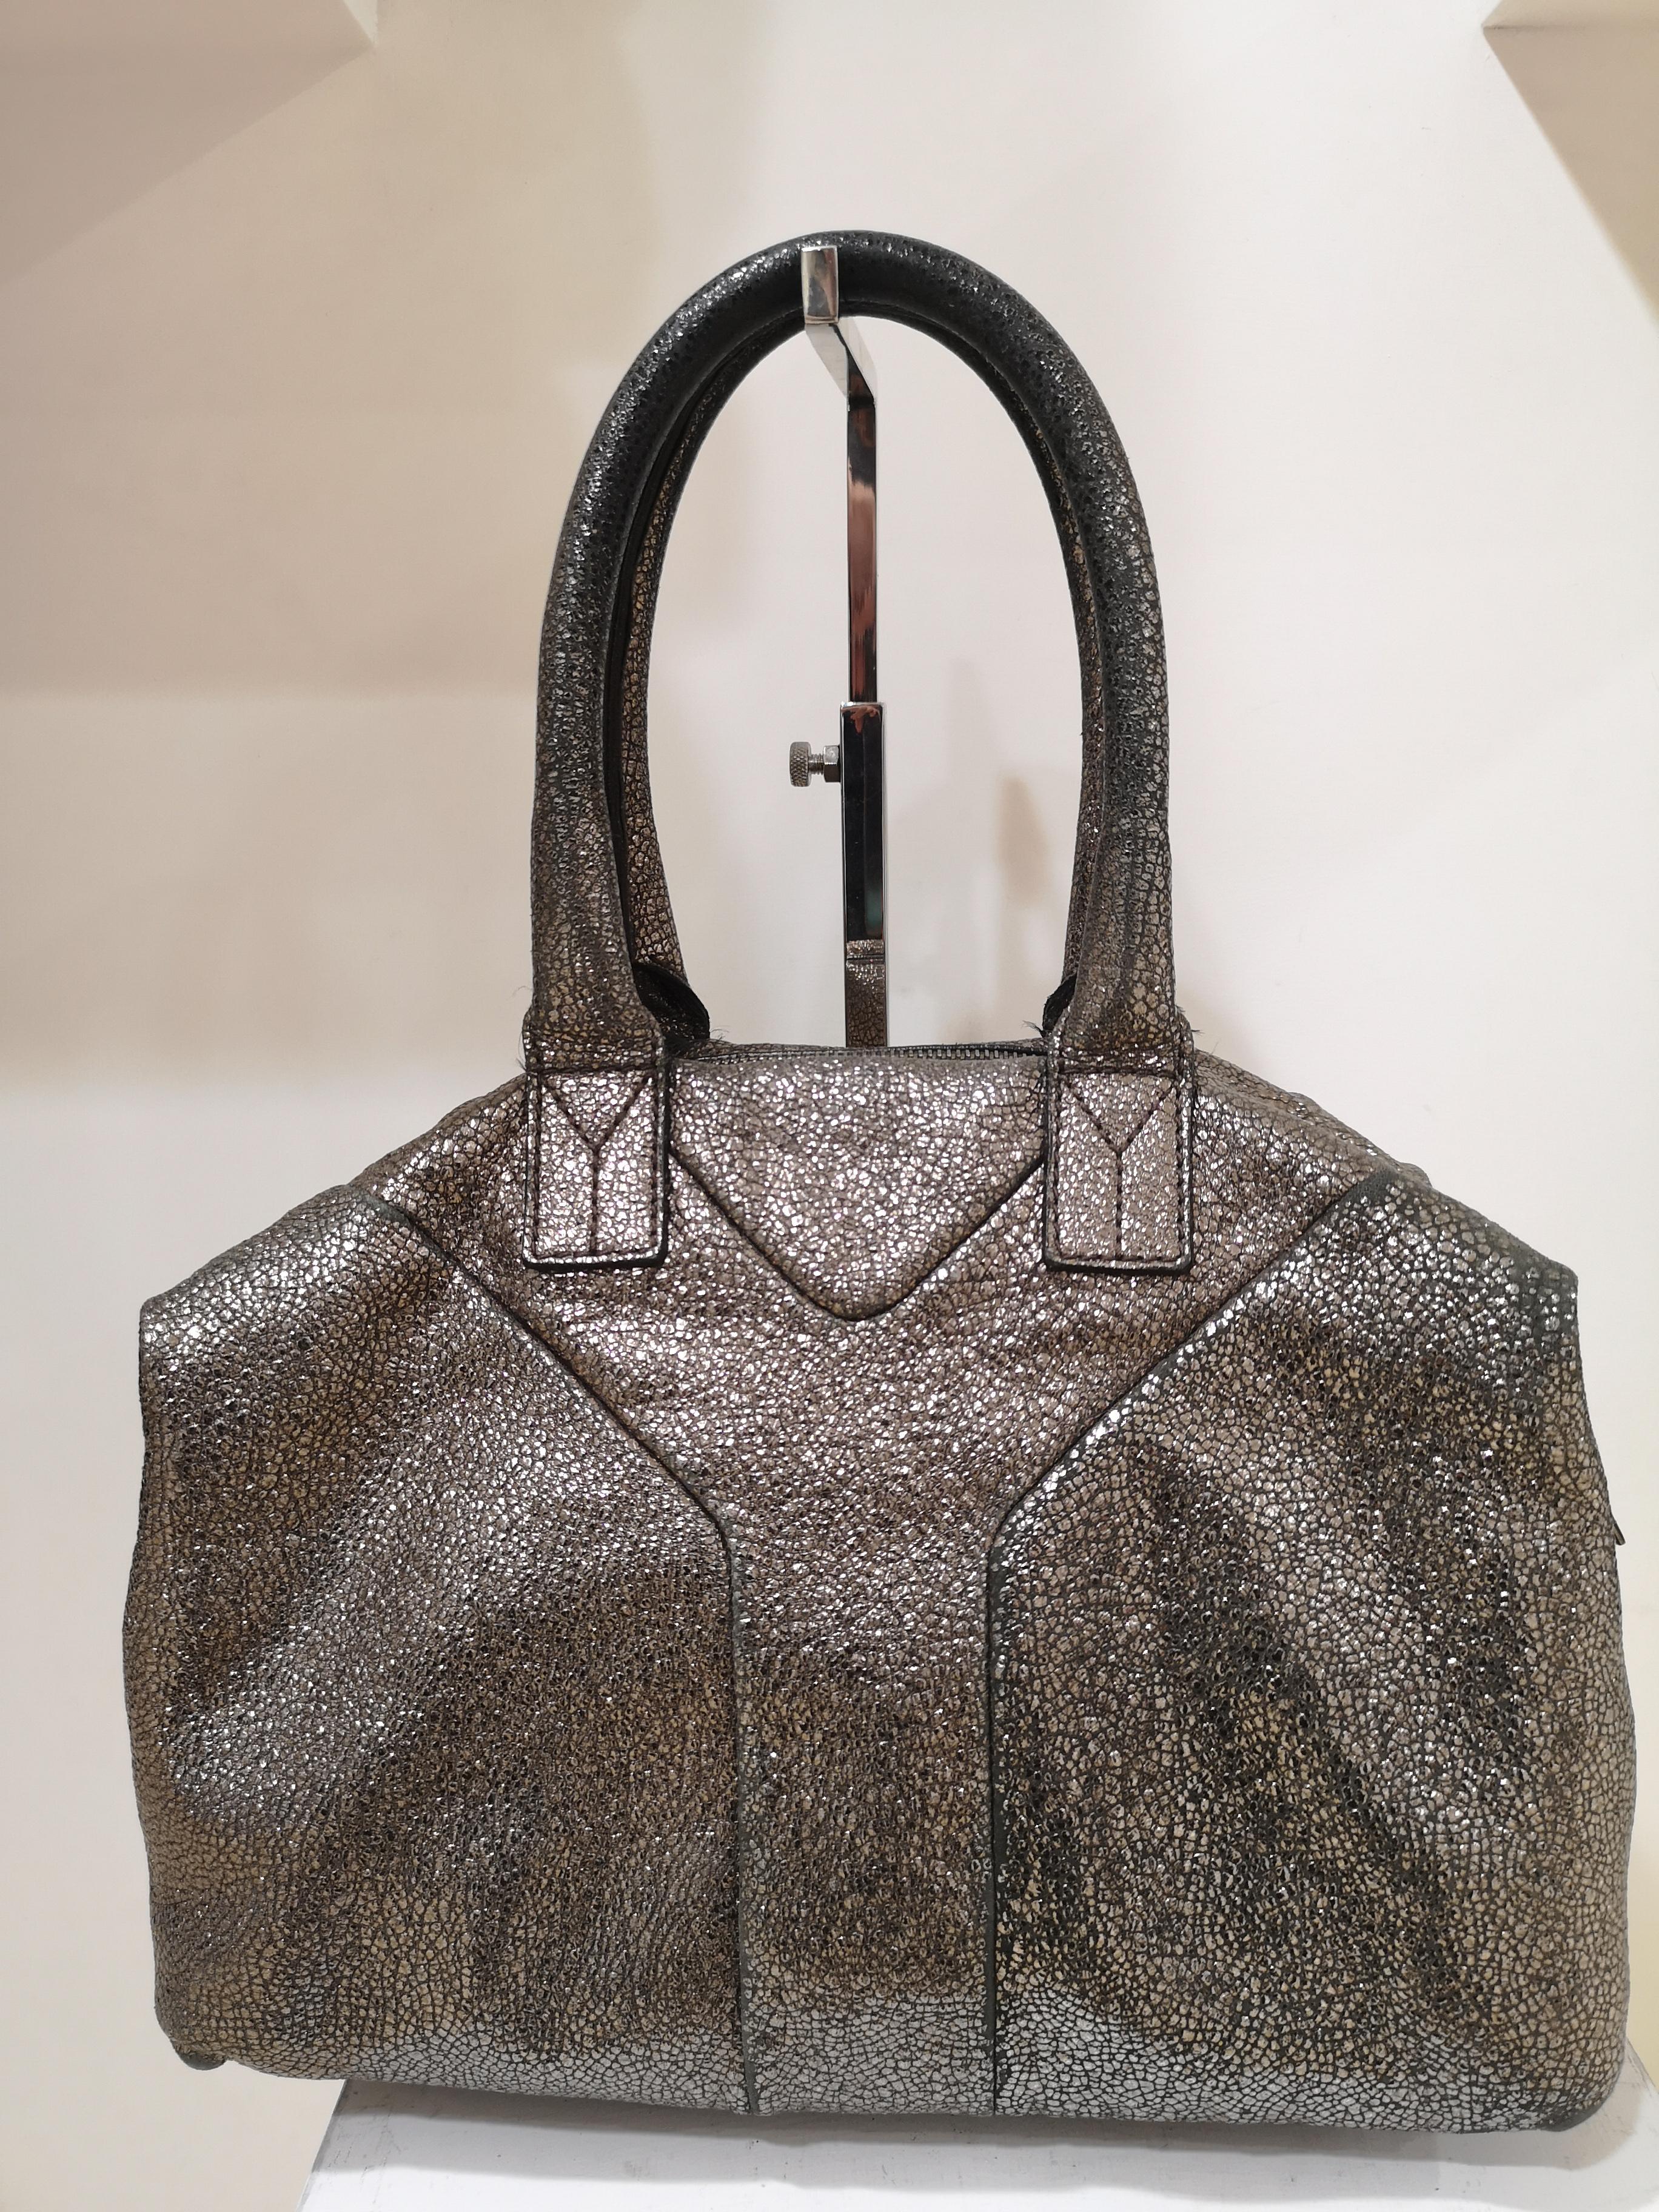 Yves Saint Laurent Silver Bag 3